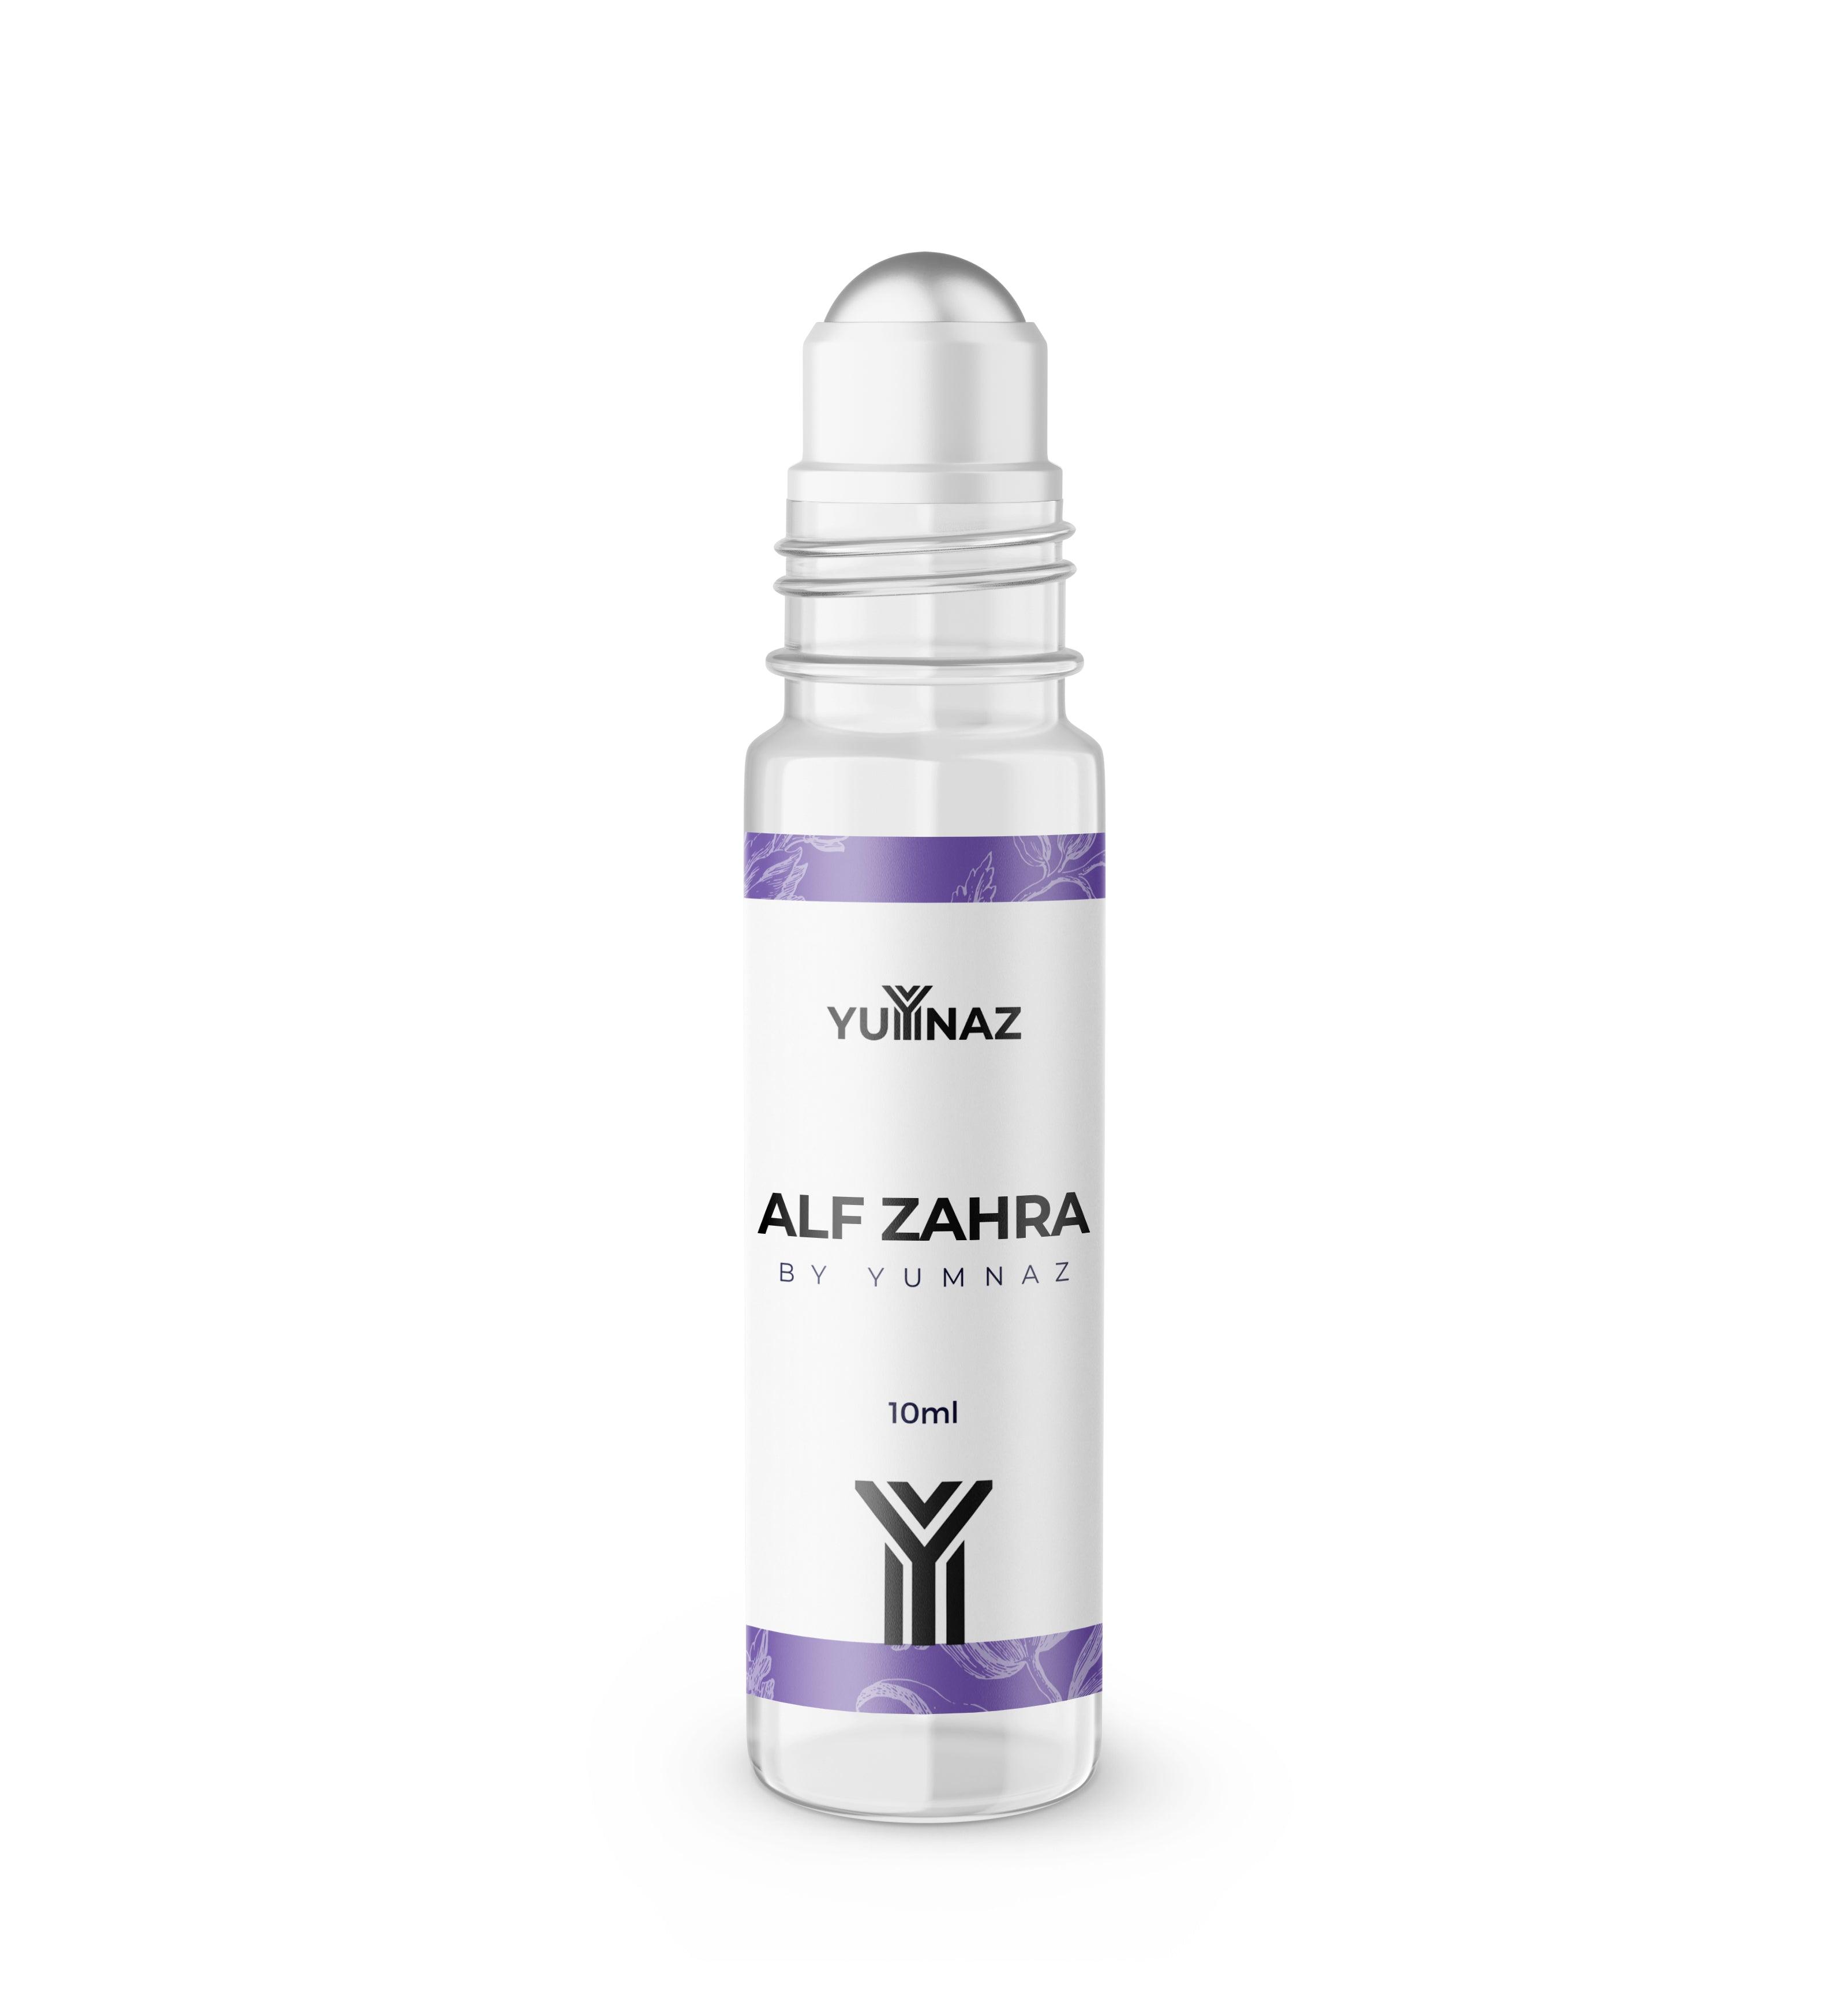 Get the best price of Alf Zahra Perfume in Pakistan - yumnaz